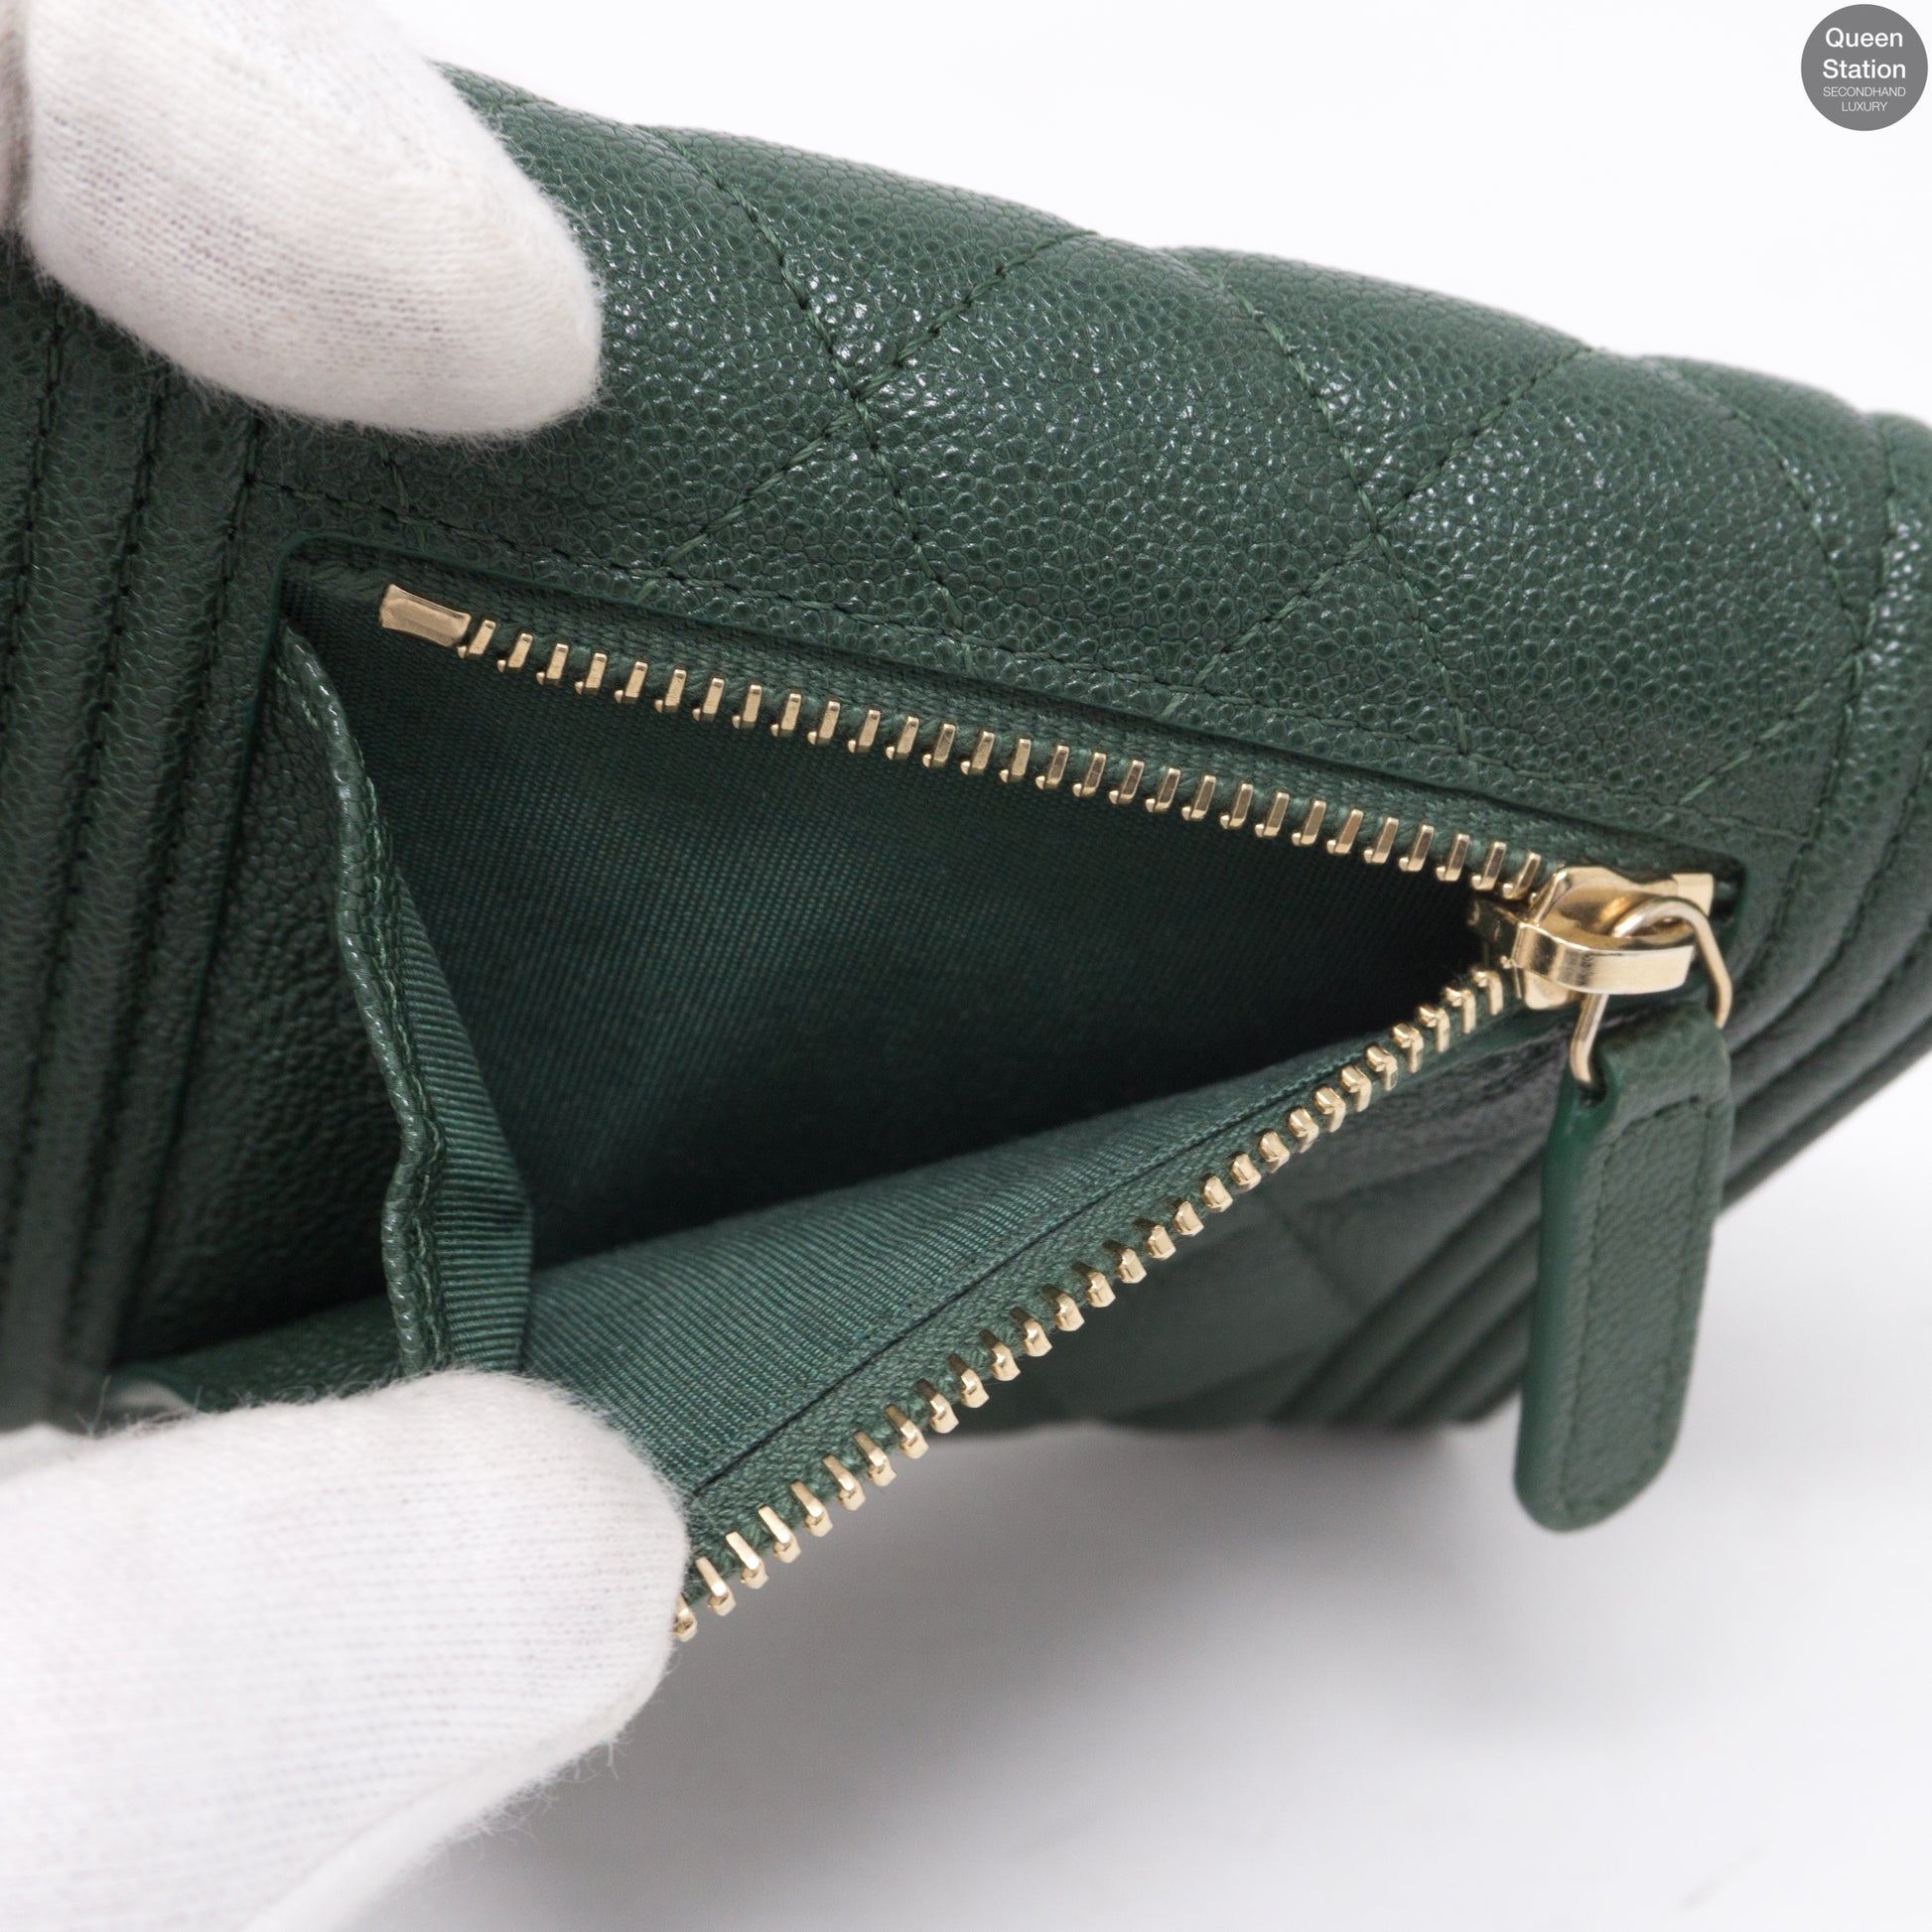 Get the best deals on CHANEL Boy Green Bags & Handbags for Women